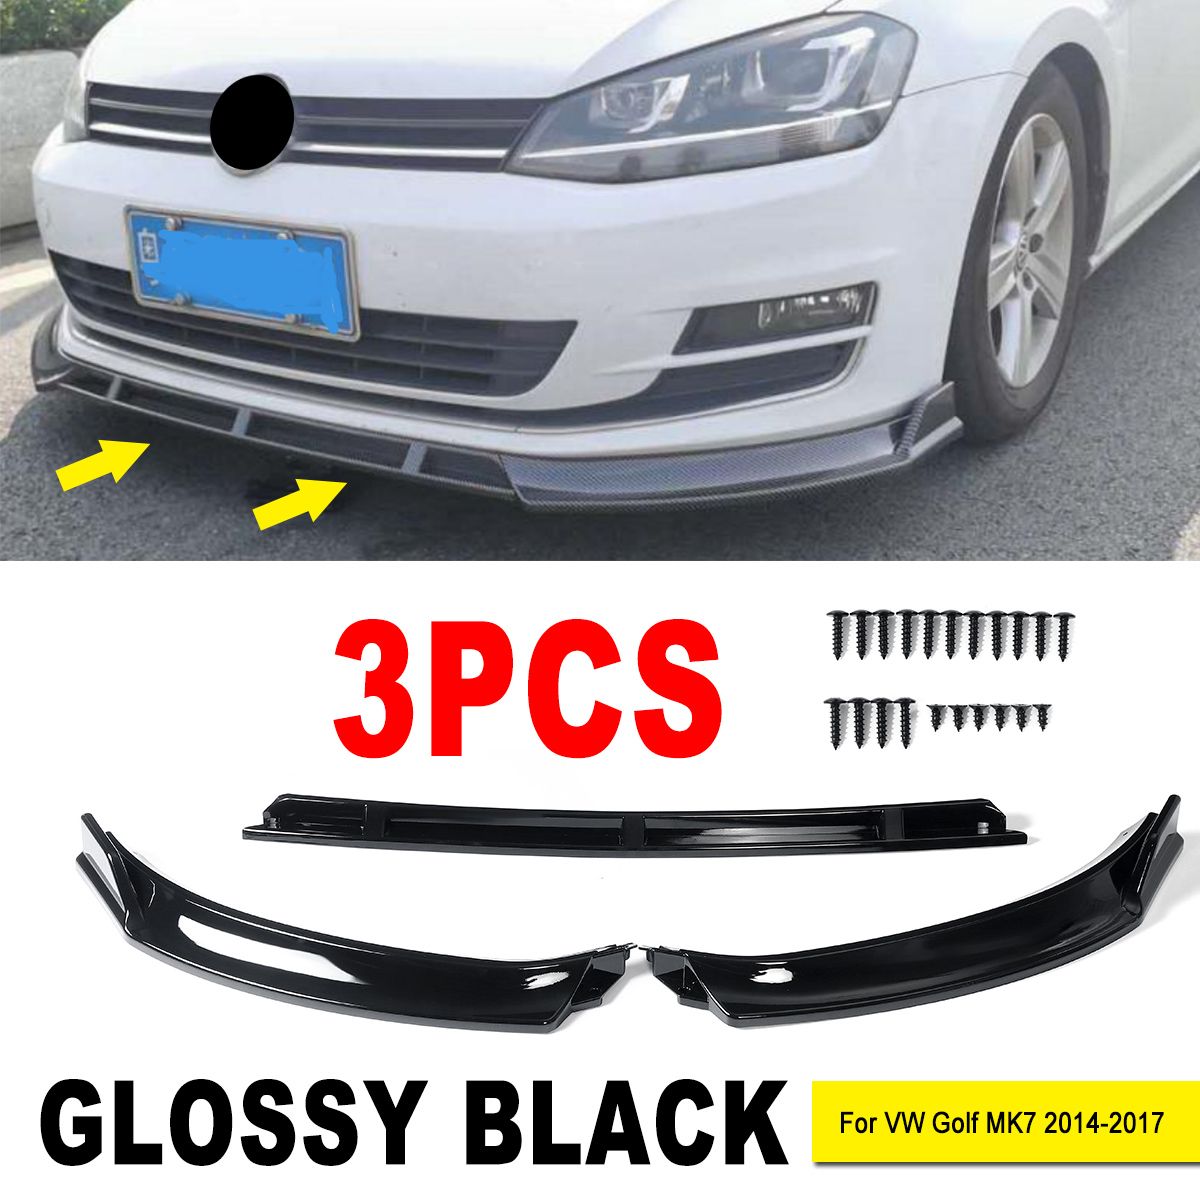 Front-Bumper-Lip-Body-Spoiler-Kit-Glossy-Black-For-VW-Golf-MK7-2014-2017-1724019